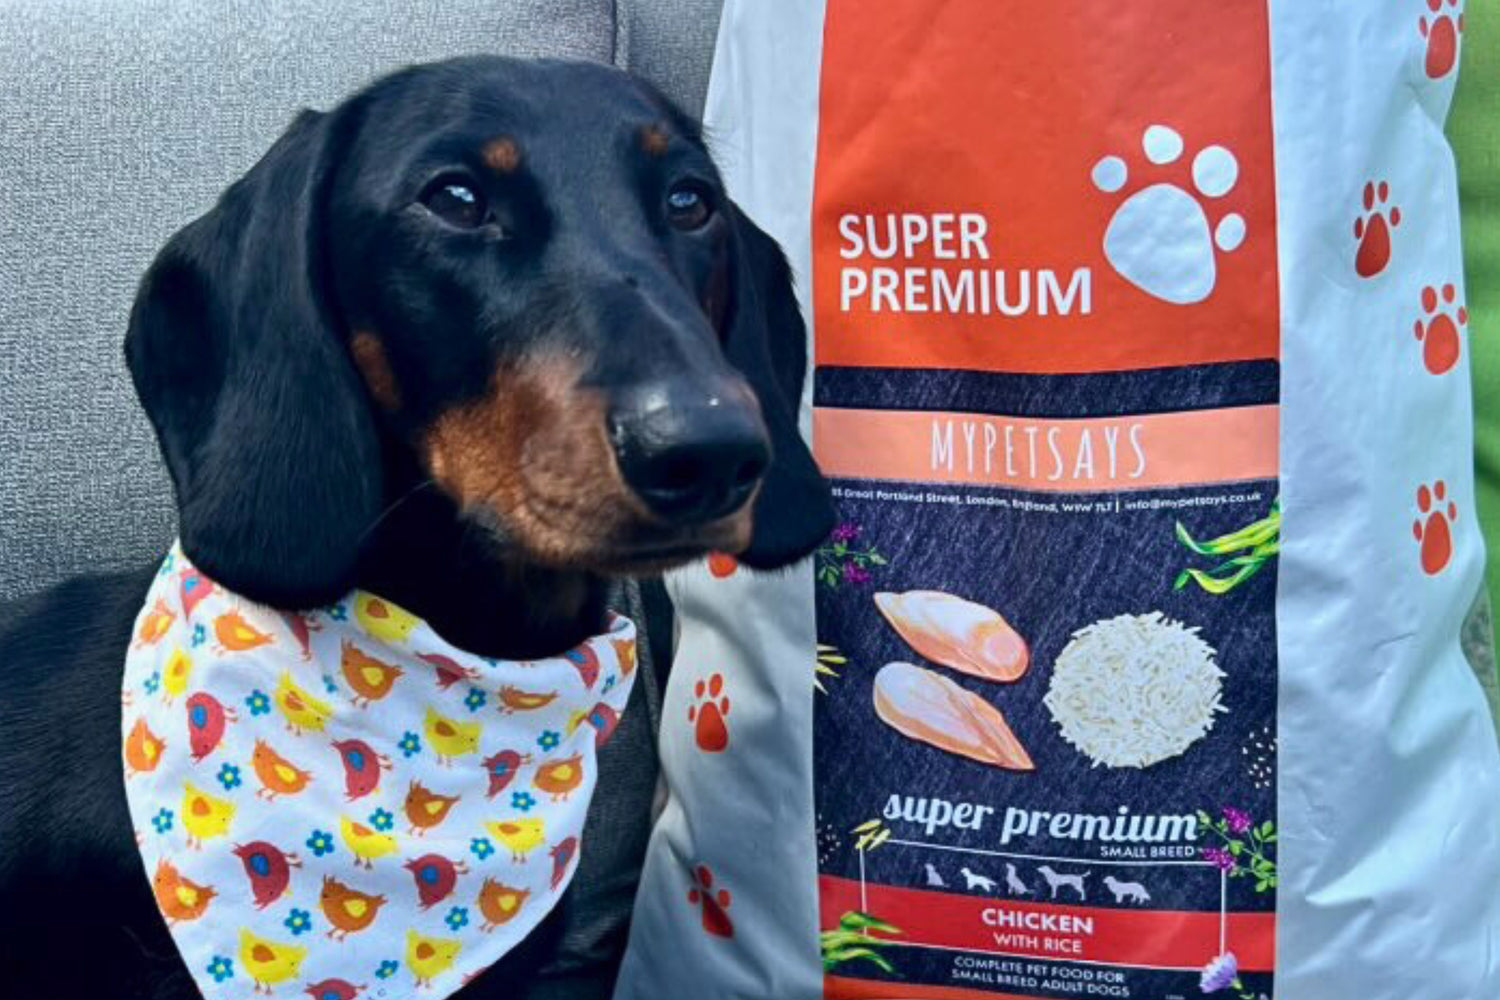 MyPetSays Super Premium Dog Food Range